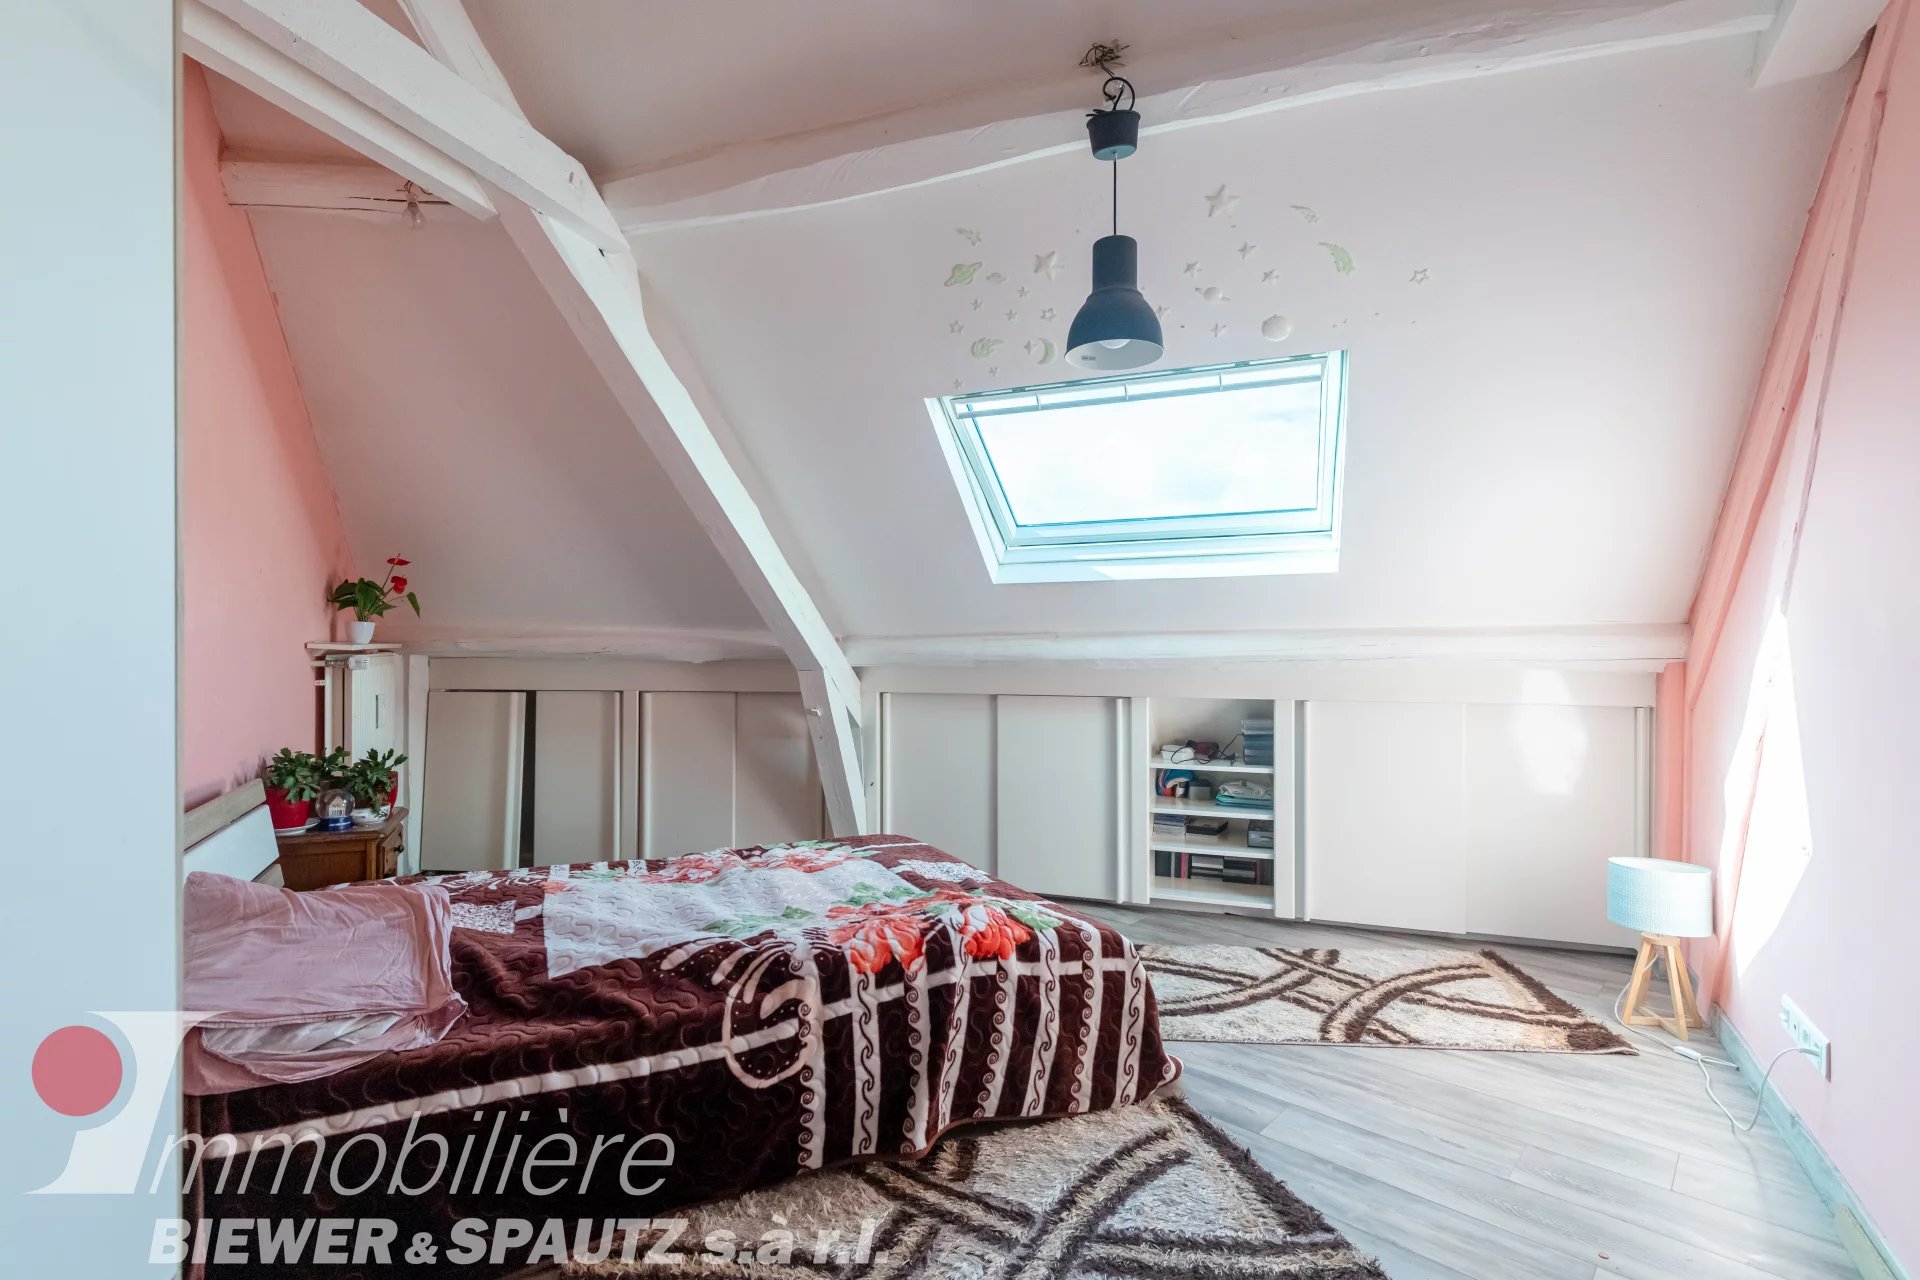 FOR SALE - 1 bedroom flat in Echternach